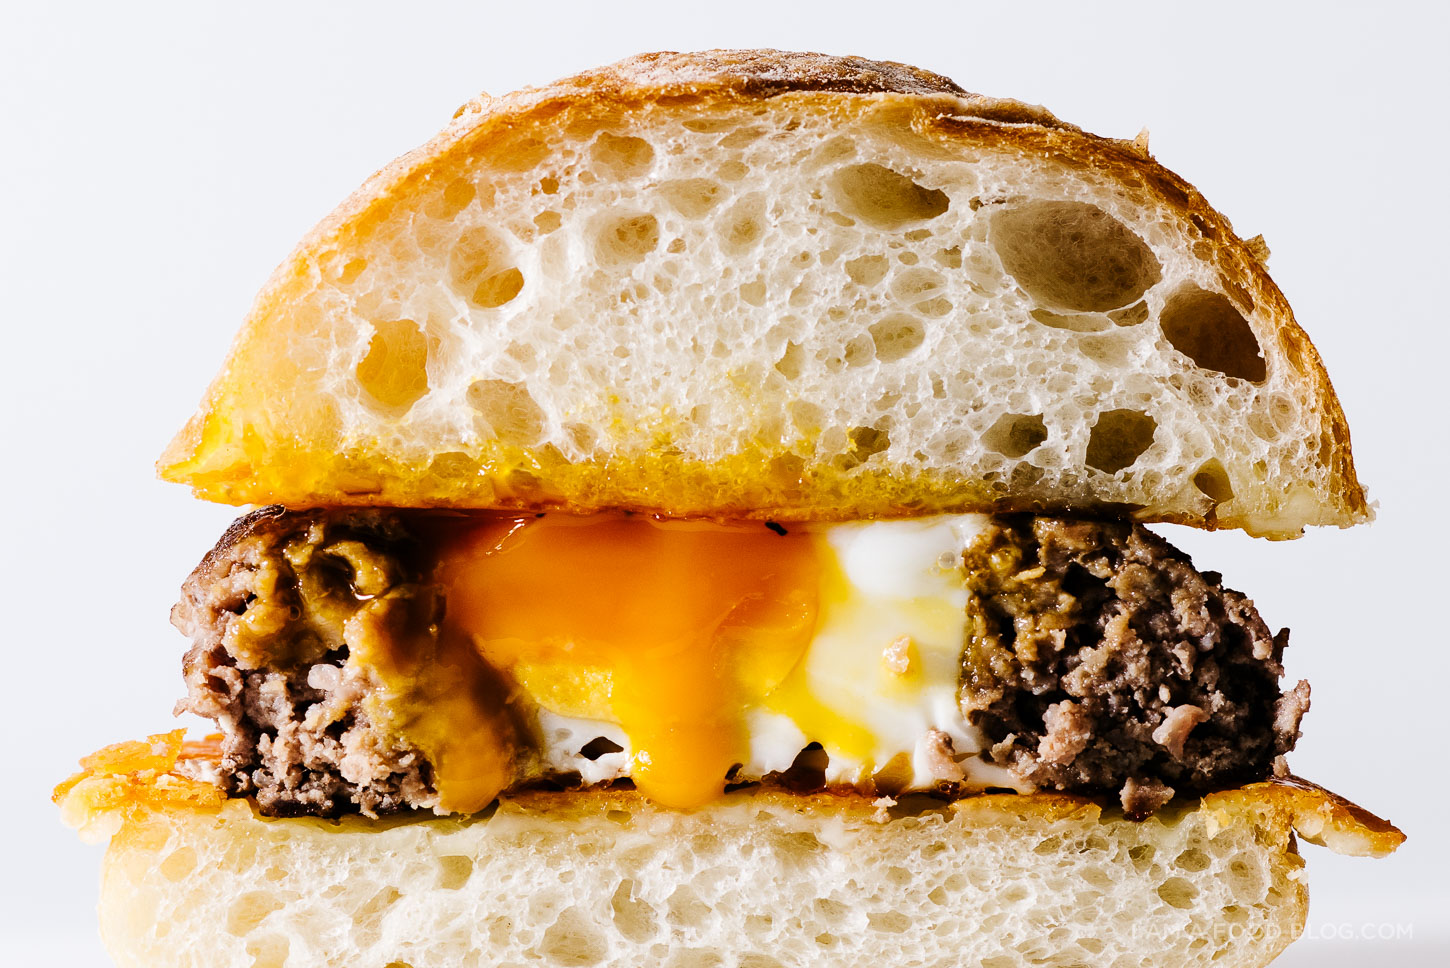 egg-in-a-hole-burger-recipe-7.jpg